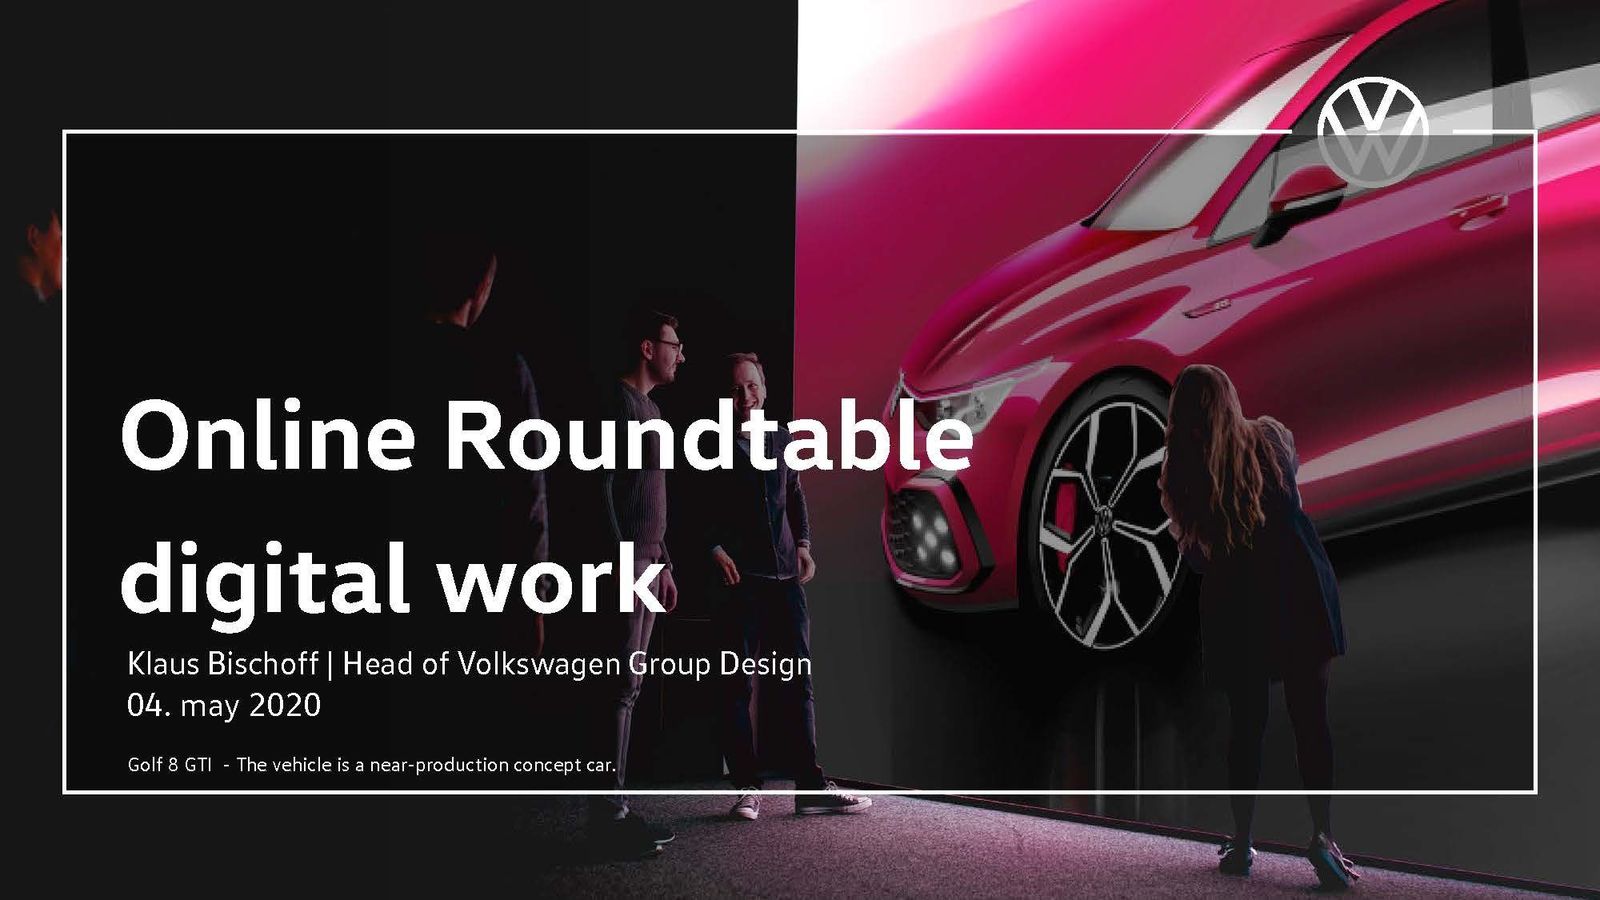 Online Roundtable digital work